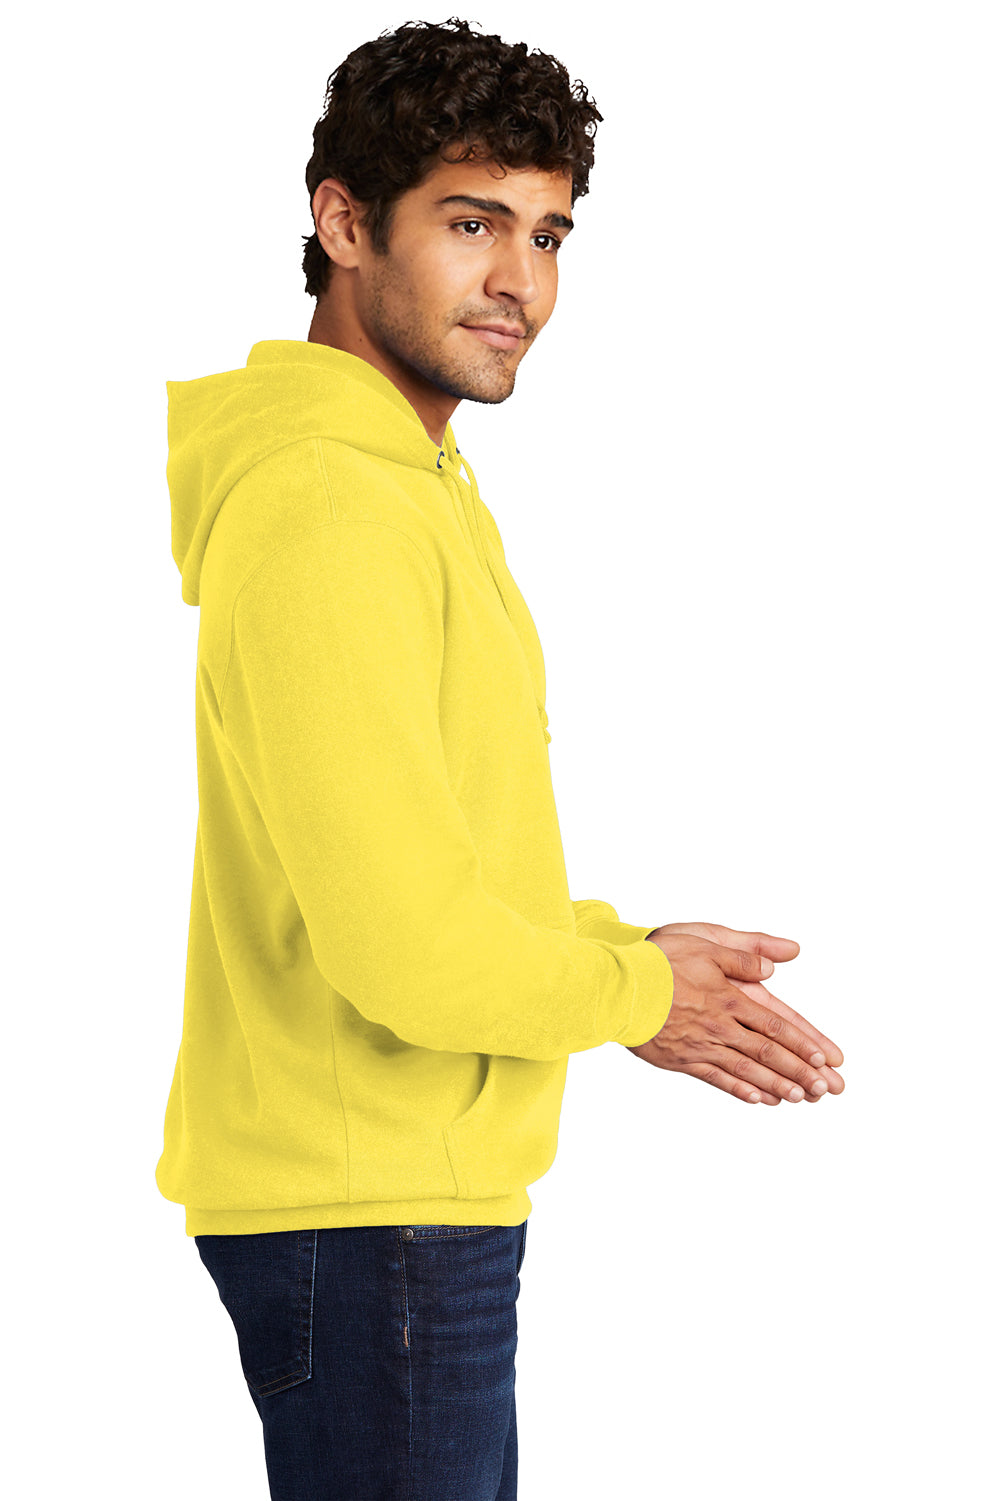 District Mens Very Important Fleece Hooded Sweatshirt Hoodie Light Yellow Side